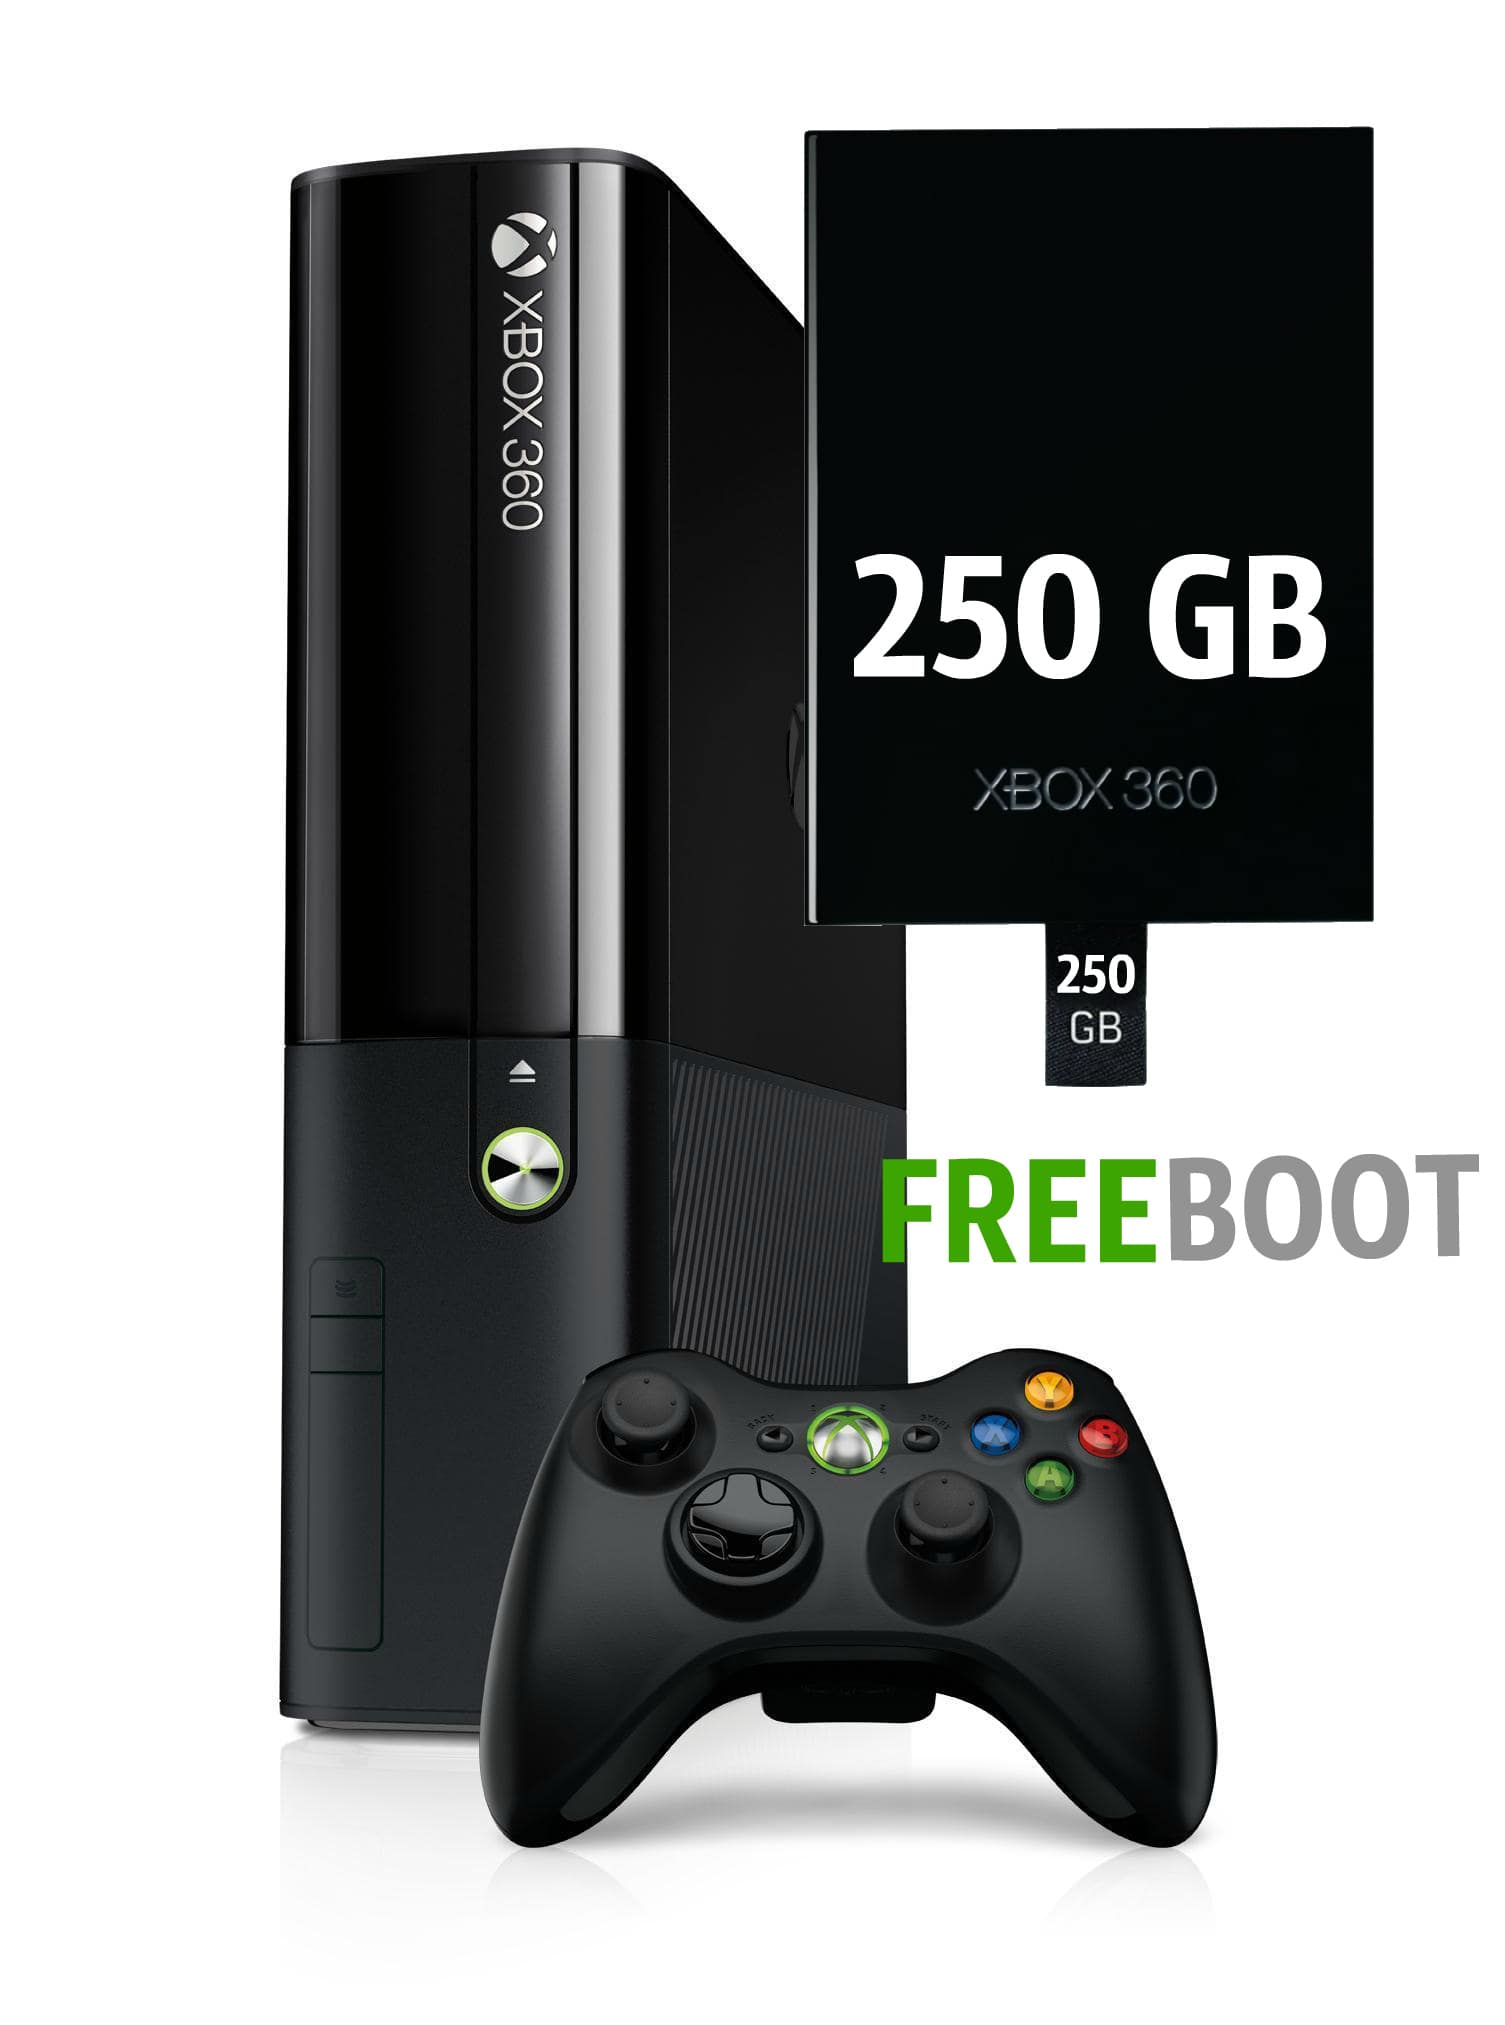 Xbox 360 E 250 Gb Freeboot (170 игр на HDD)